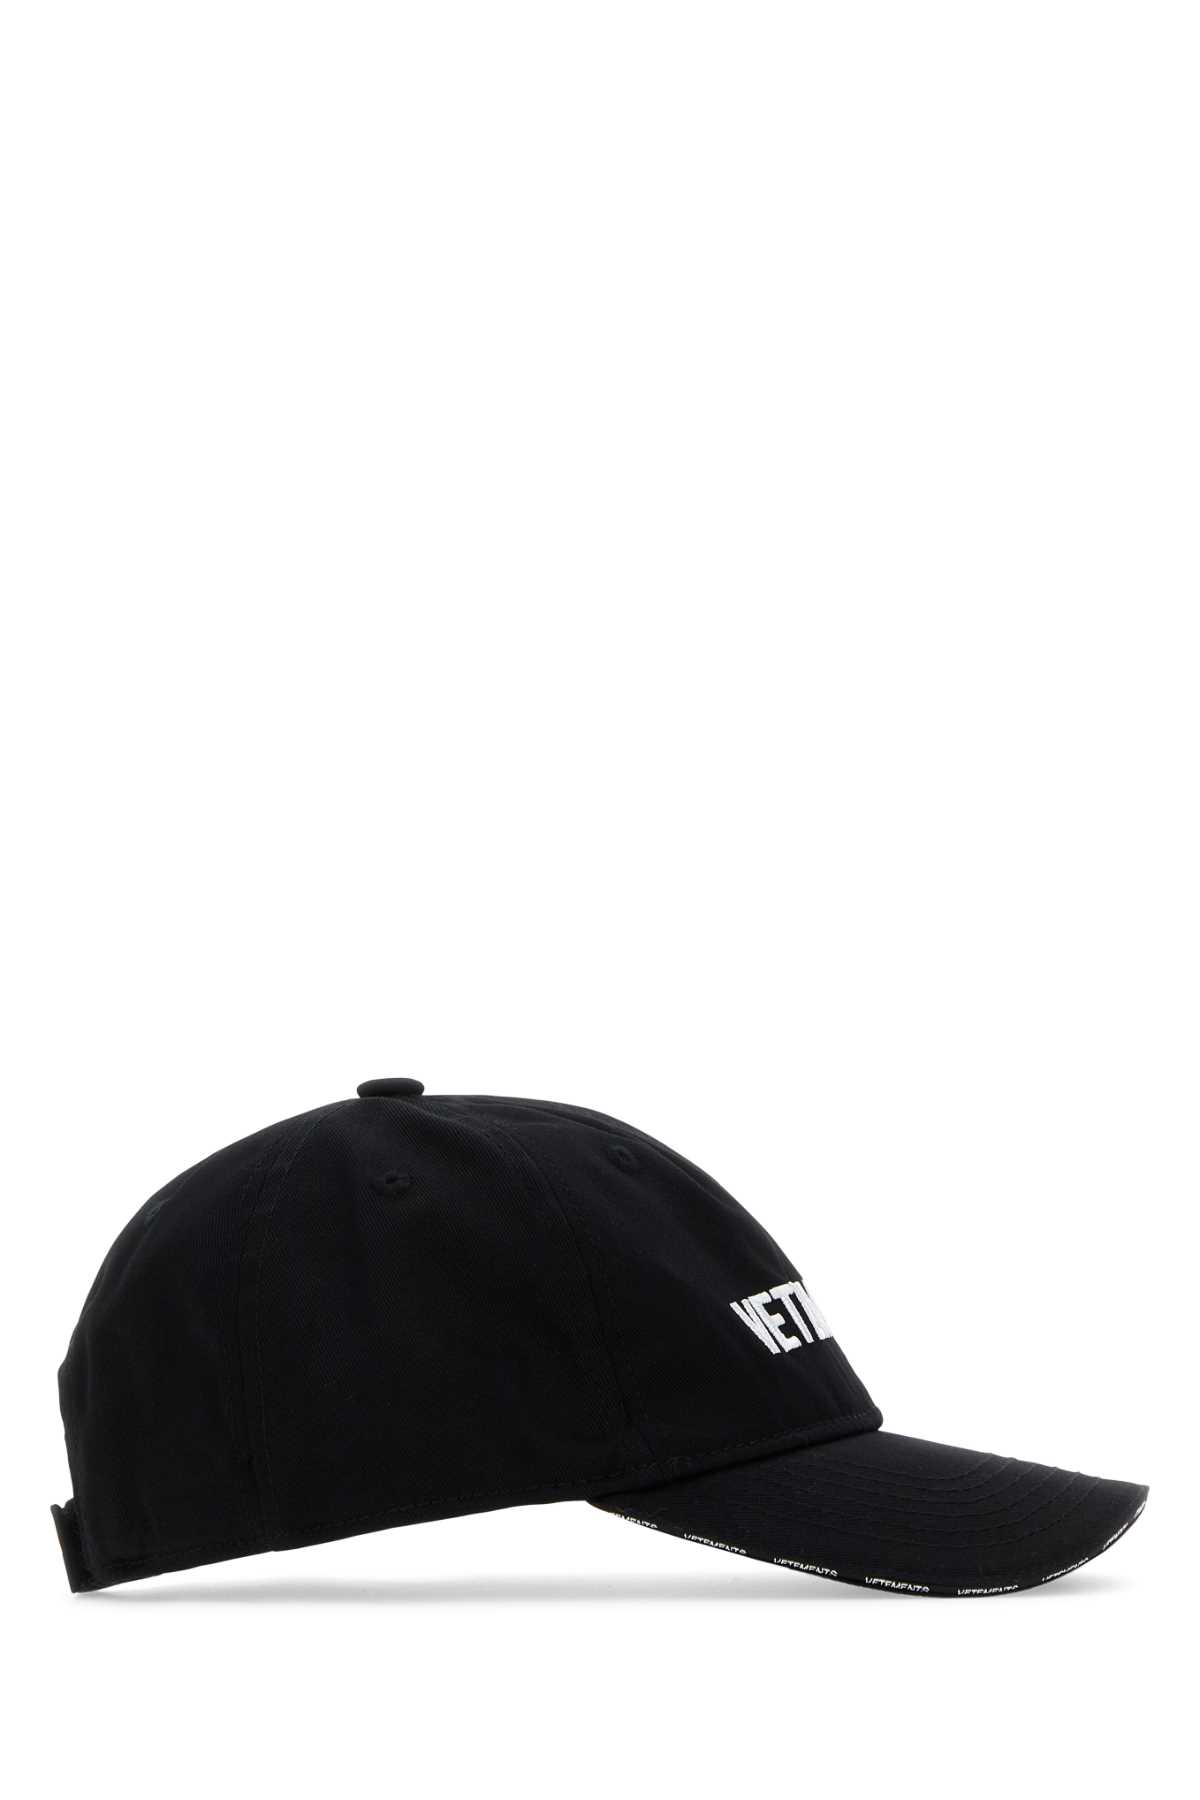 Shop Vetements Black Cotton Baseball Cap